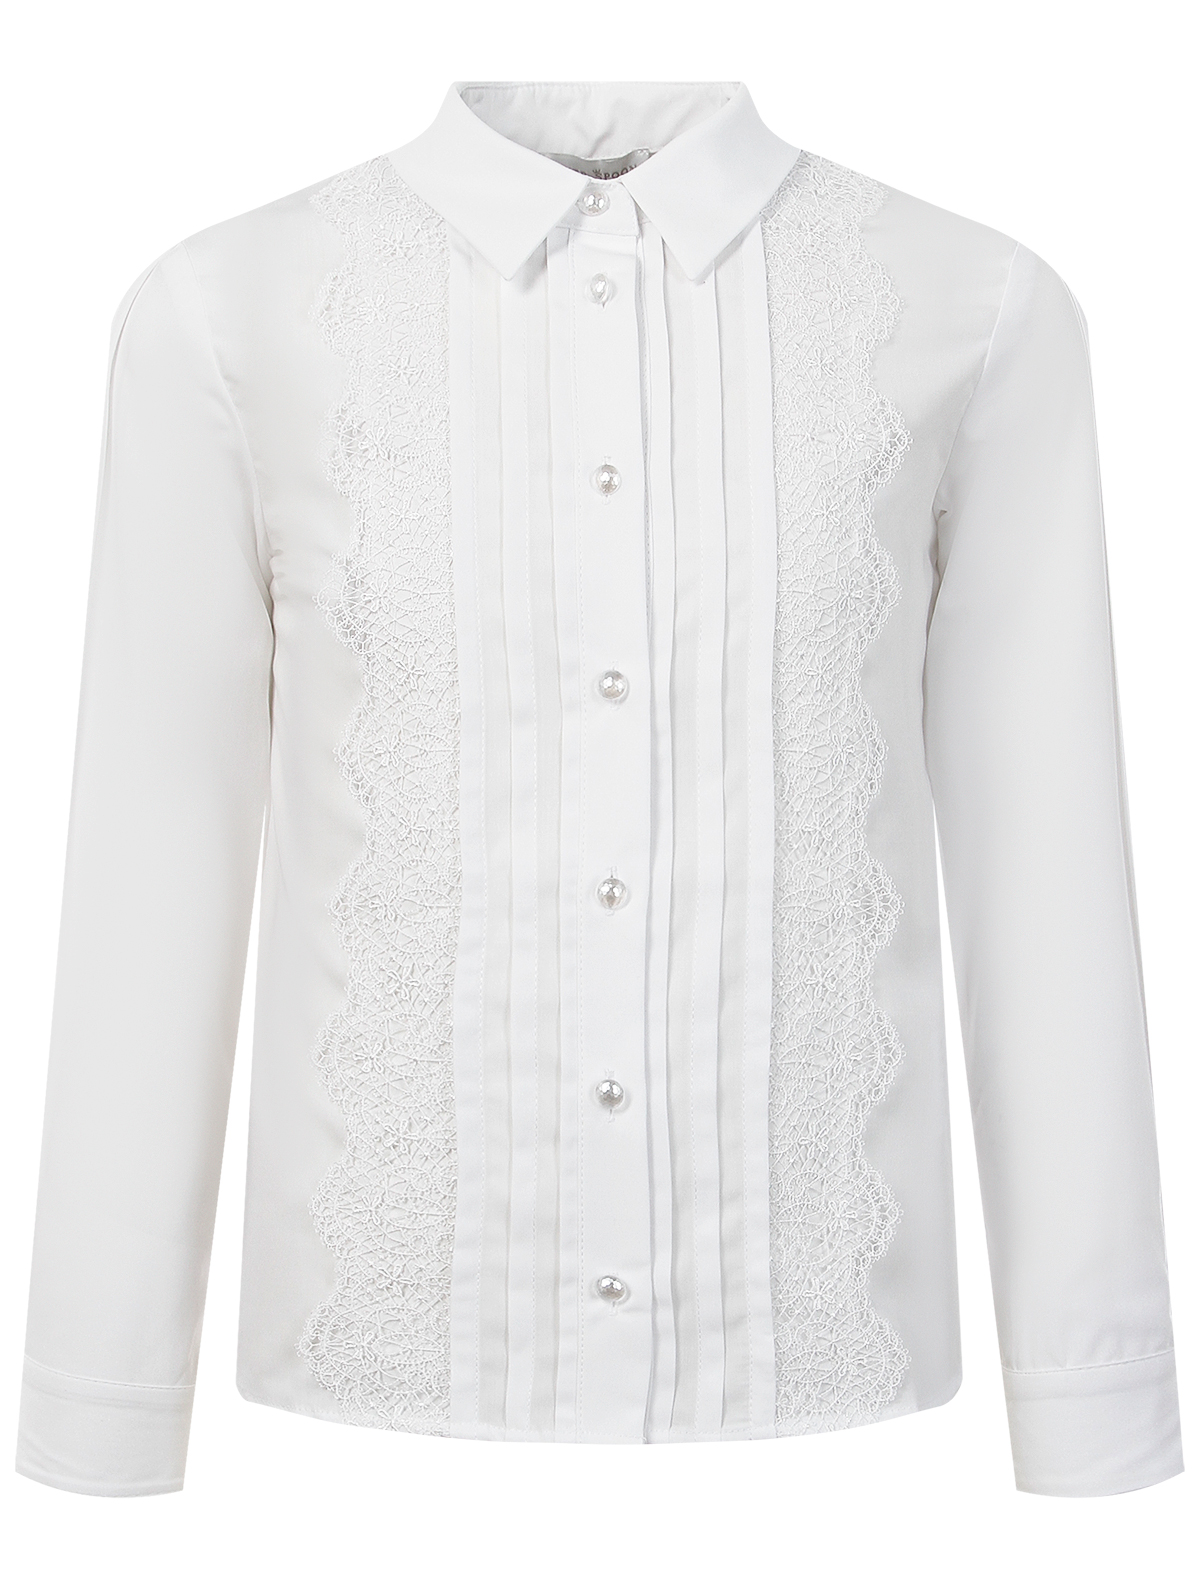 Блуза SILVER SPOON белого цвета